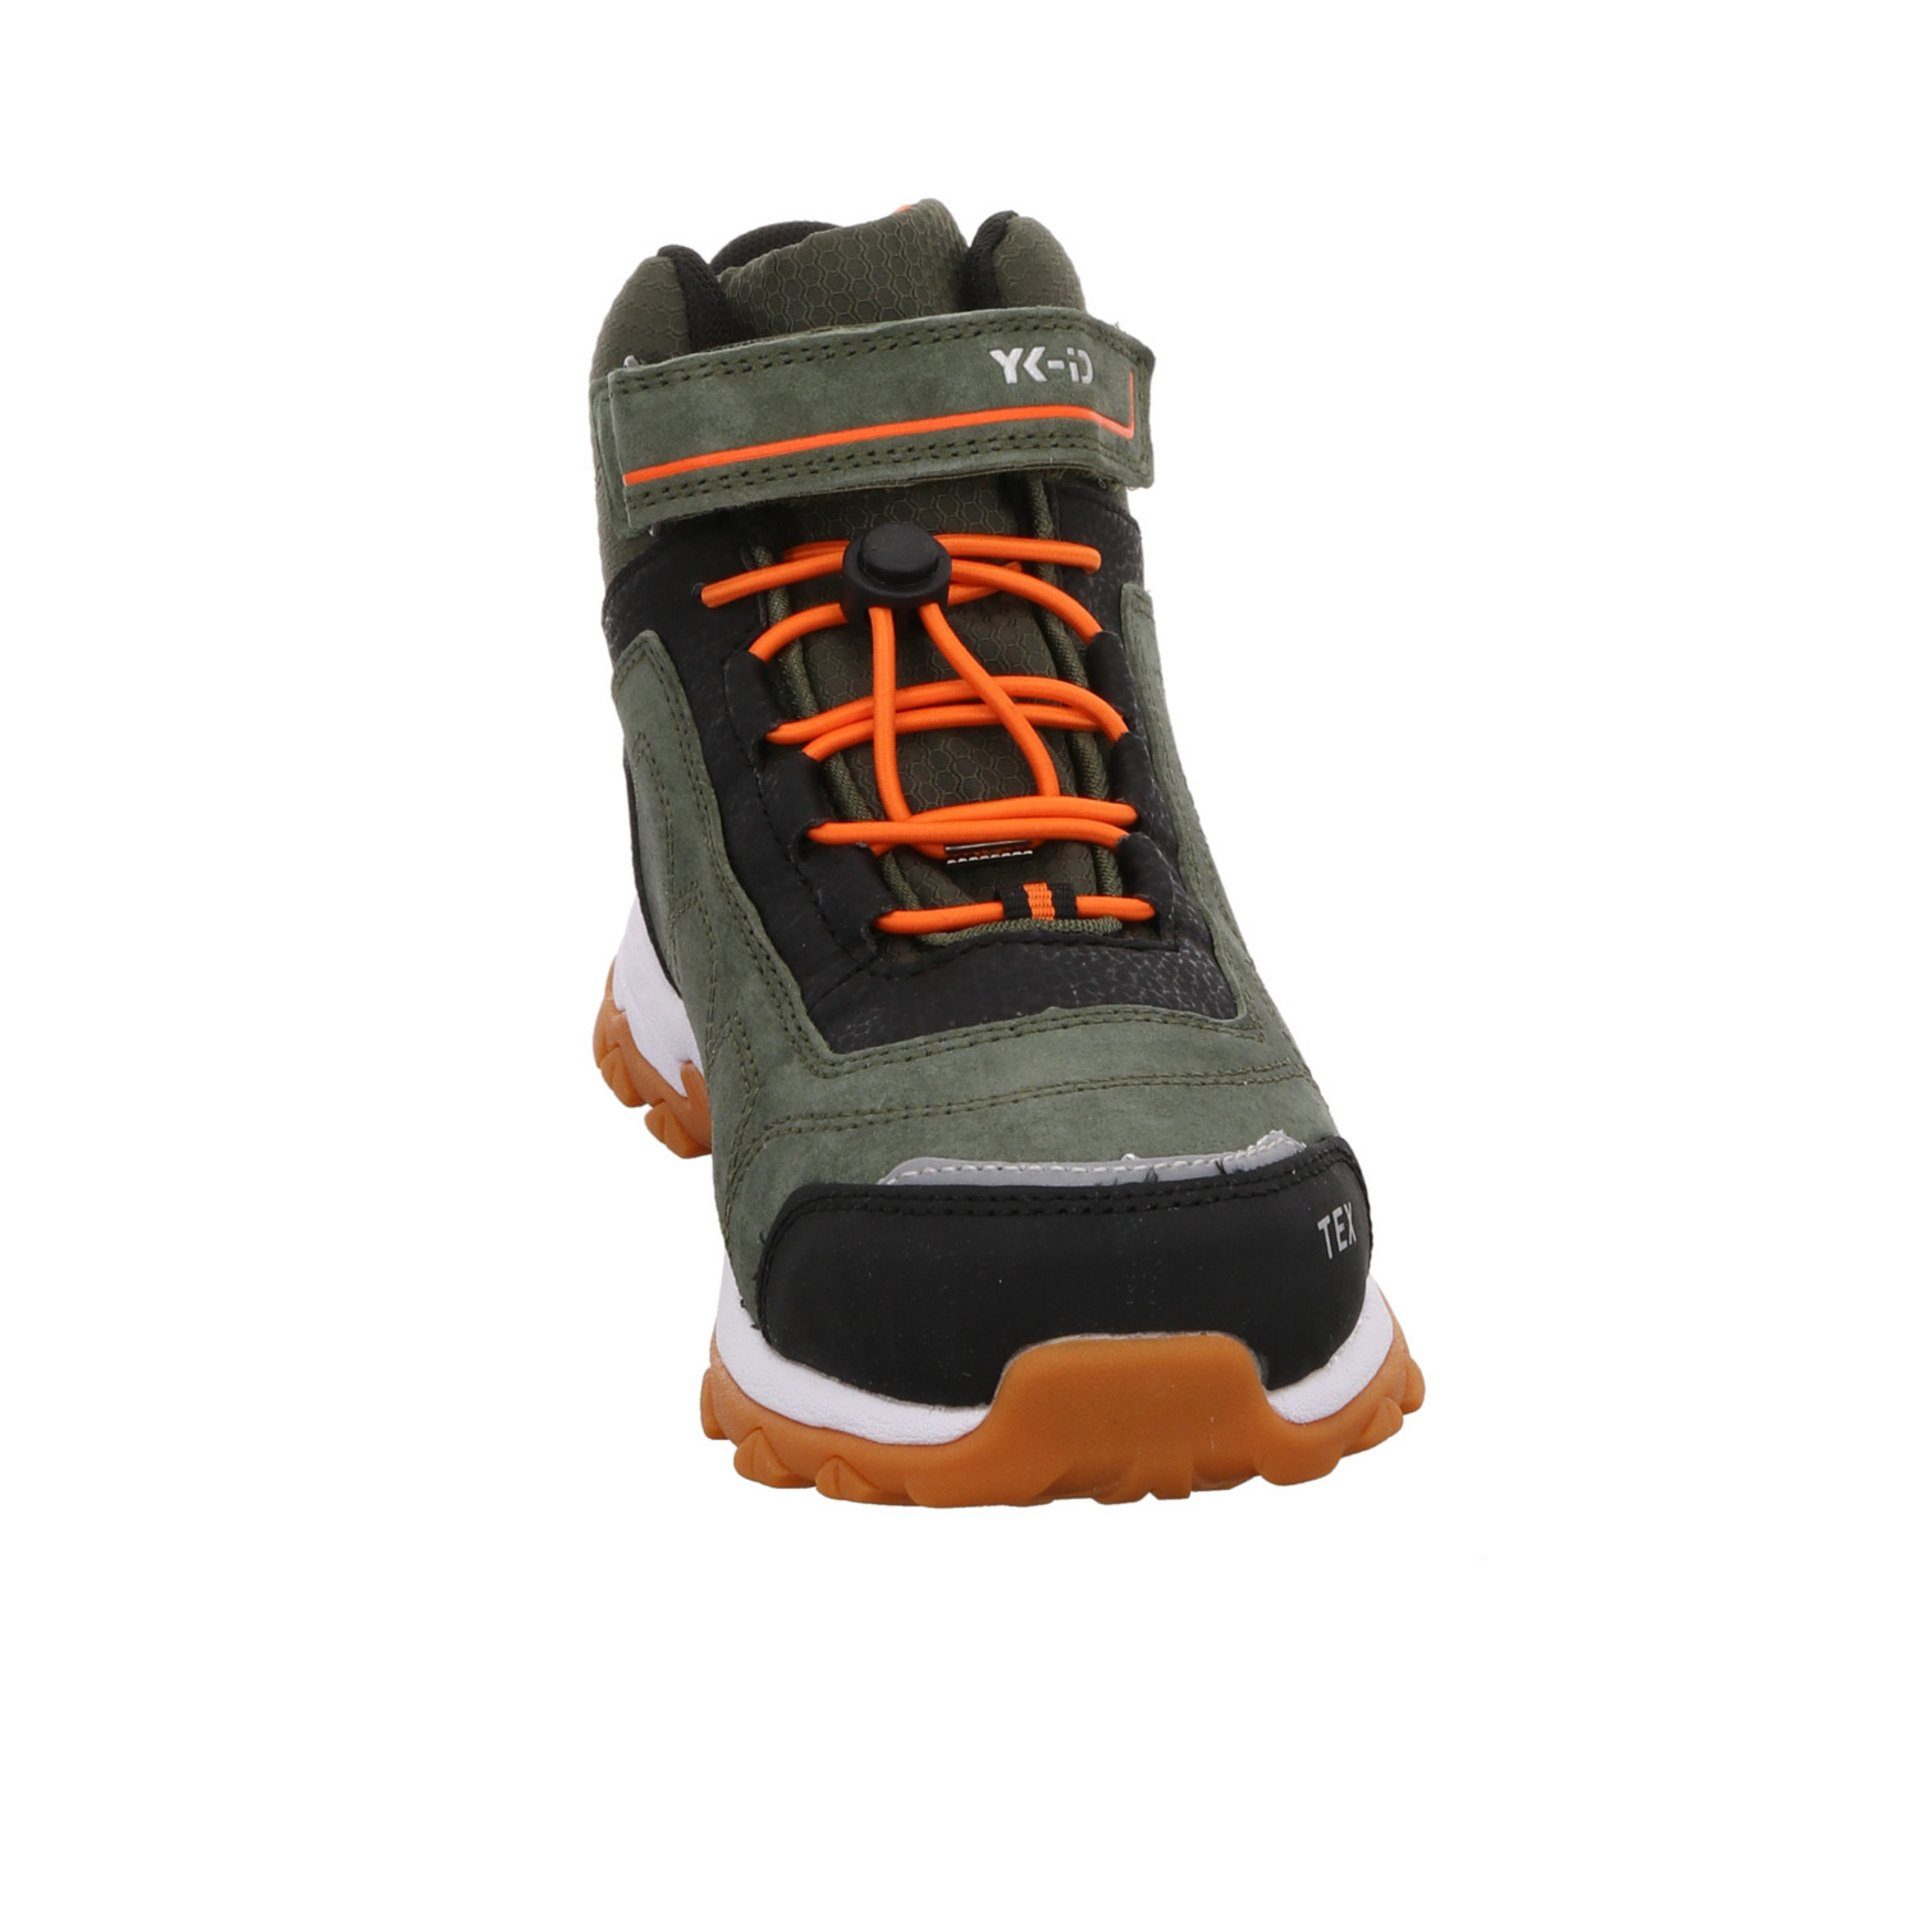 Leandro Winterboots Boots uni YK-ID by Logoschriftzug Lederkombination olive Lurchi orange Lederkombination